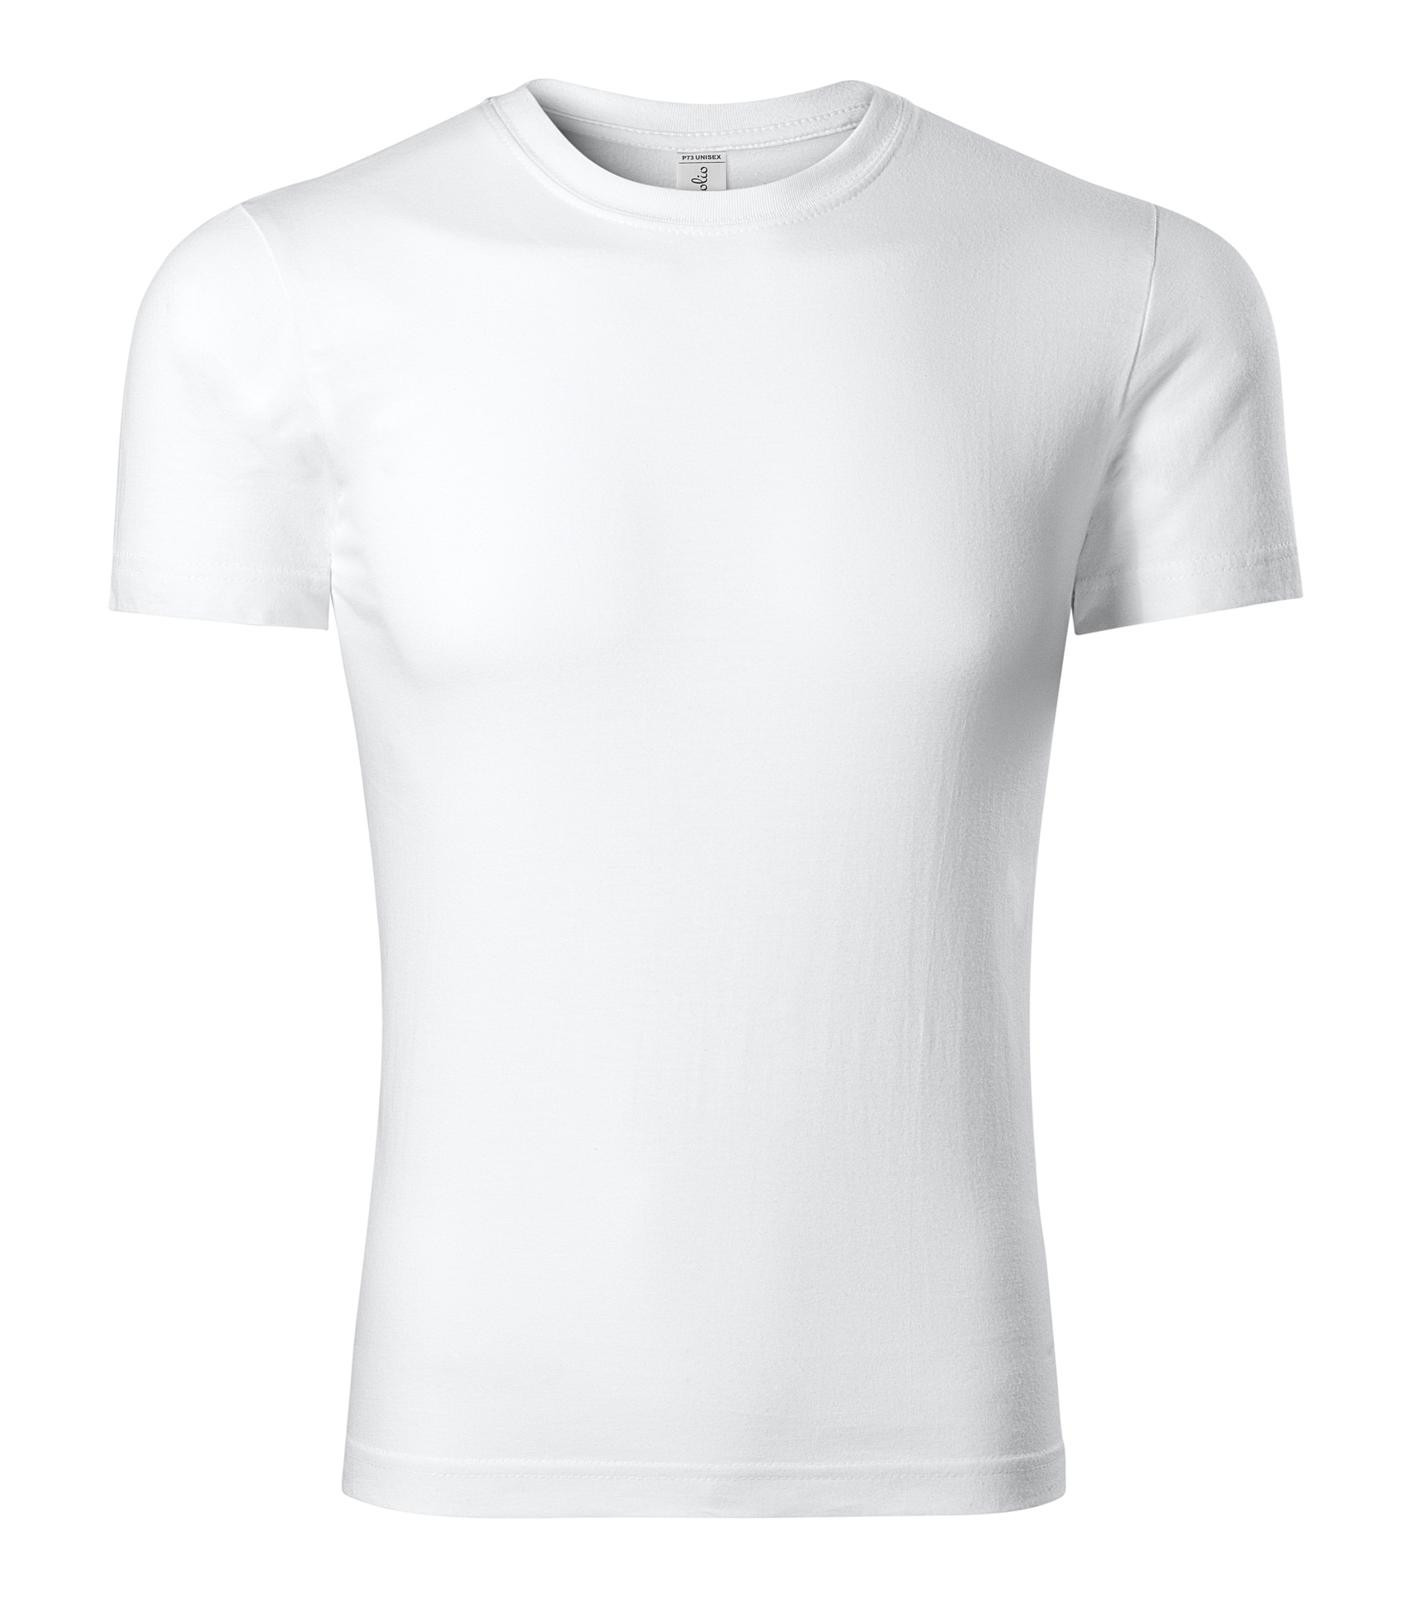 Unisex tričko Piccolio Paint P73 - veľkosť: 4XL, farba: biela